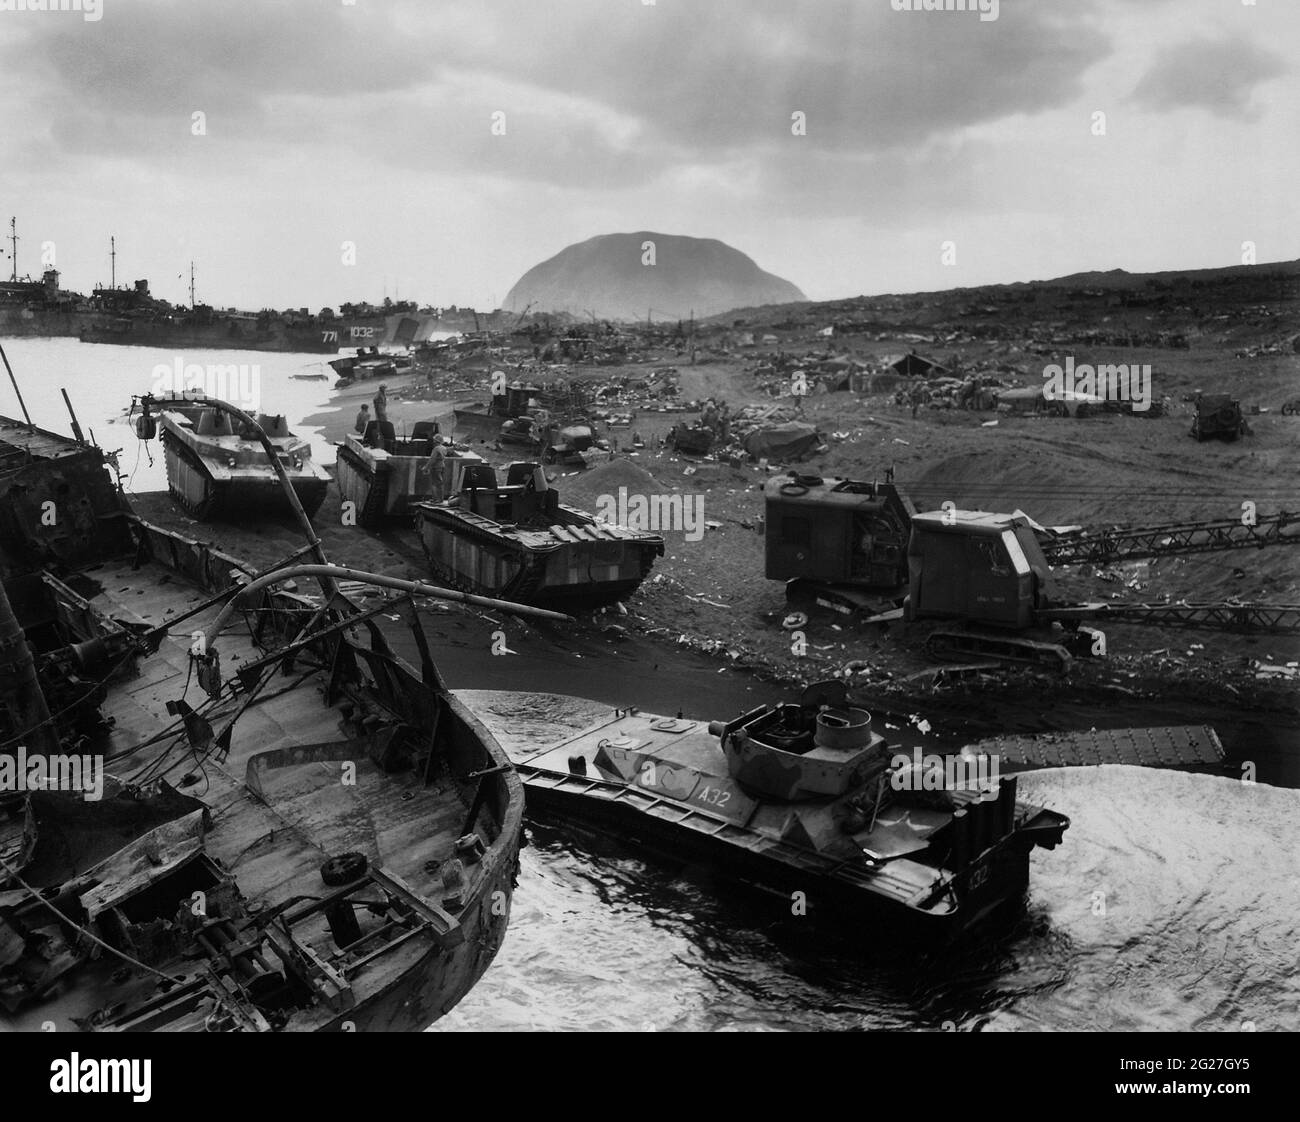 Wreckage on the beach during The Battle of Iwo Jima, World War II. Stock Photo